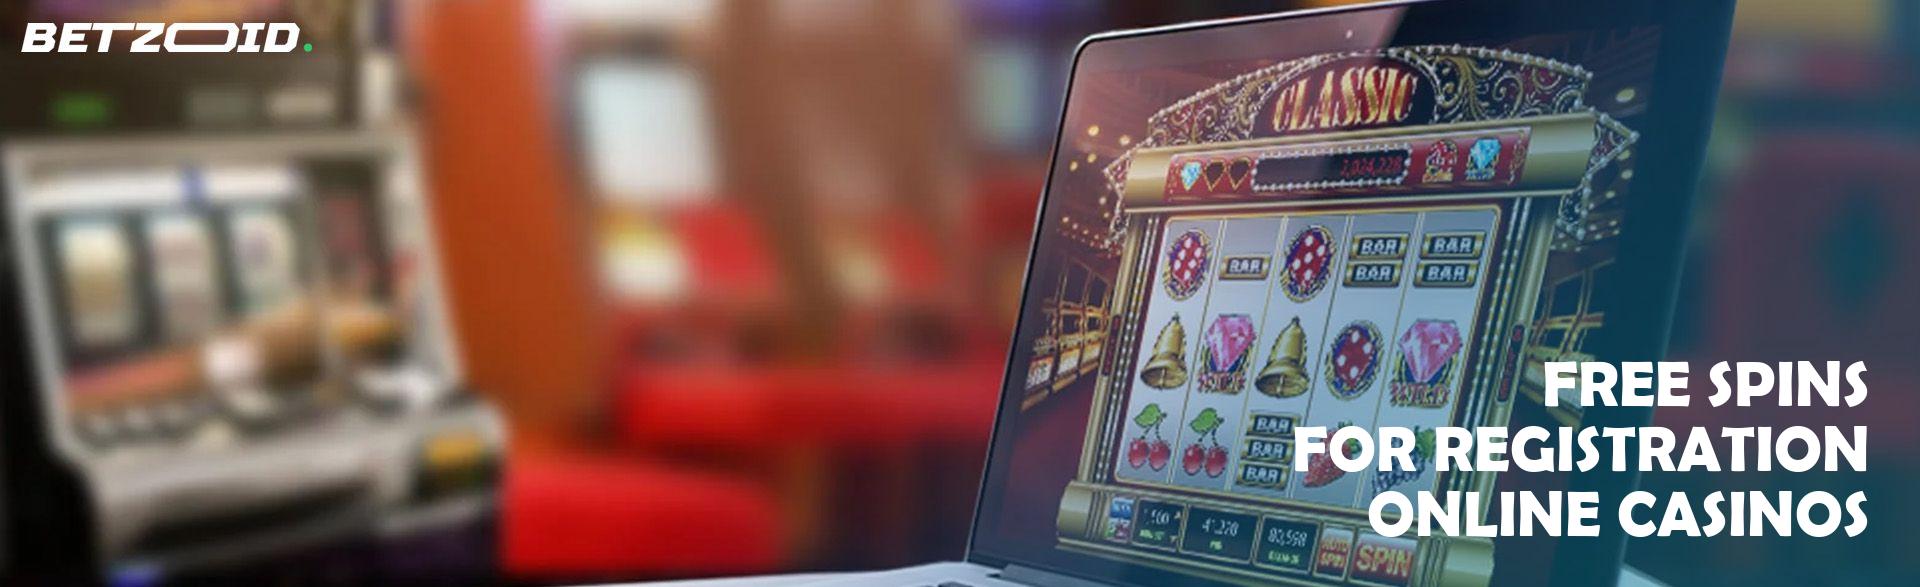 Free Spins For Registration Online Casinos.